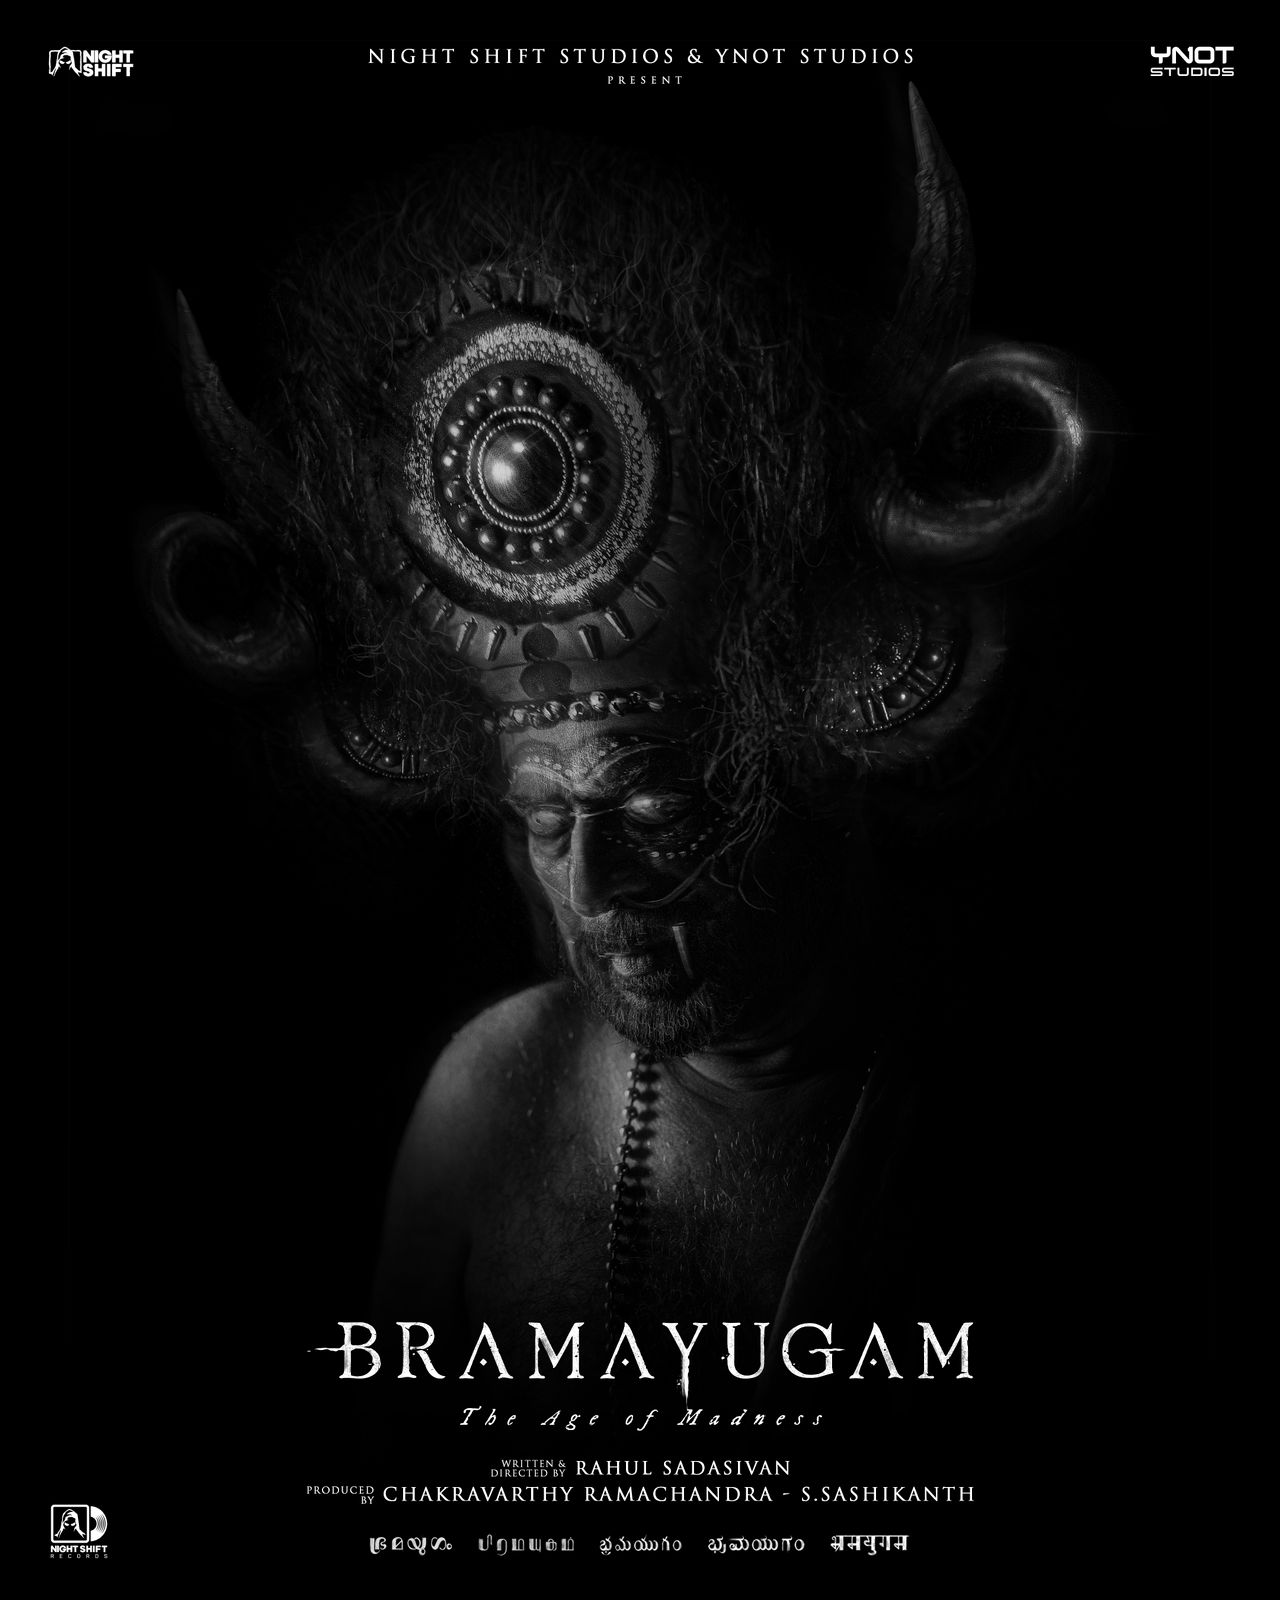 Brahmayugam